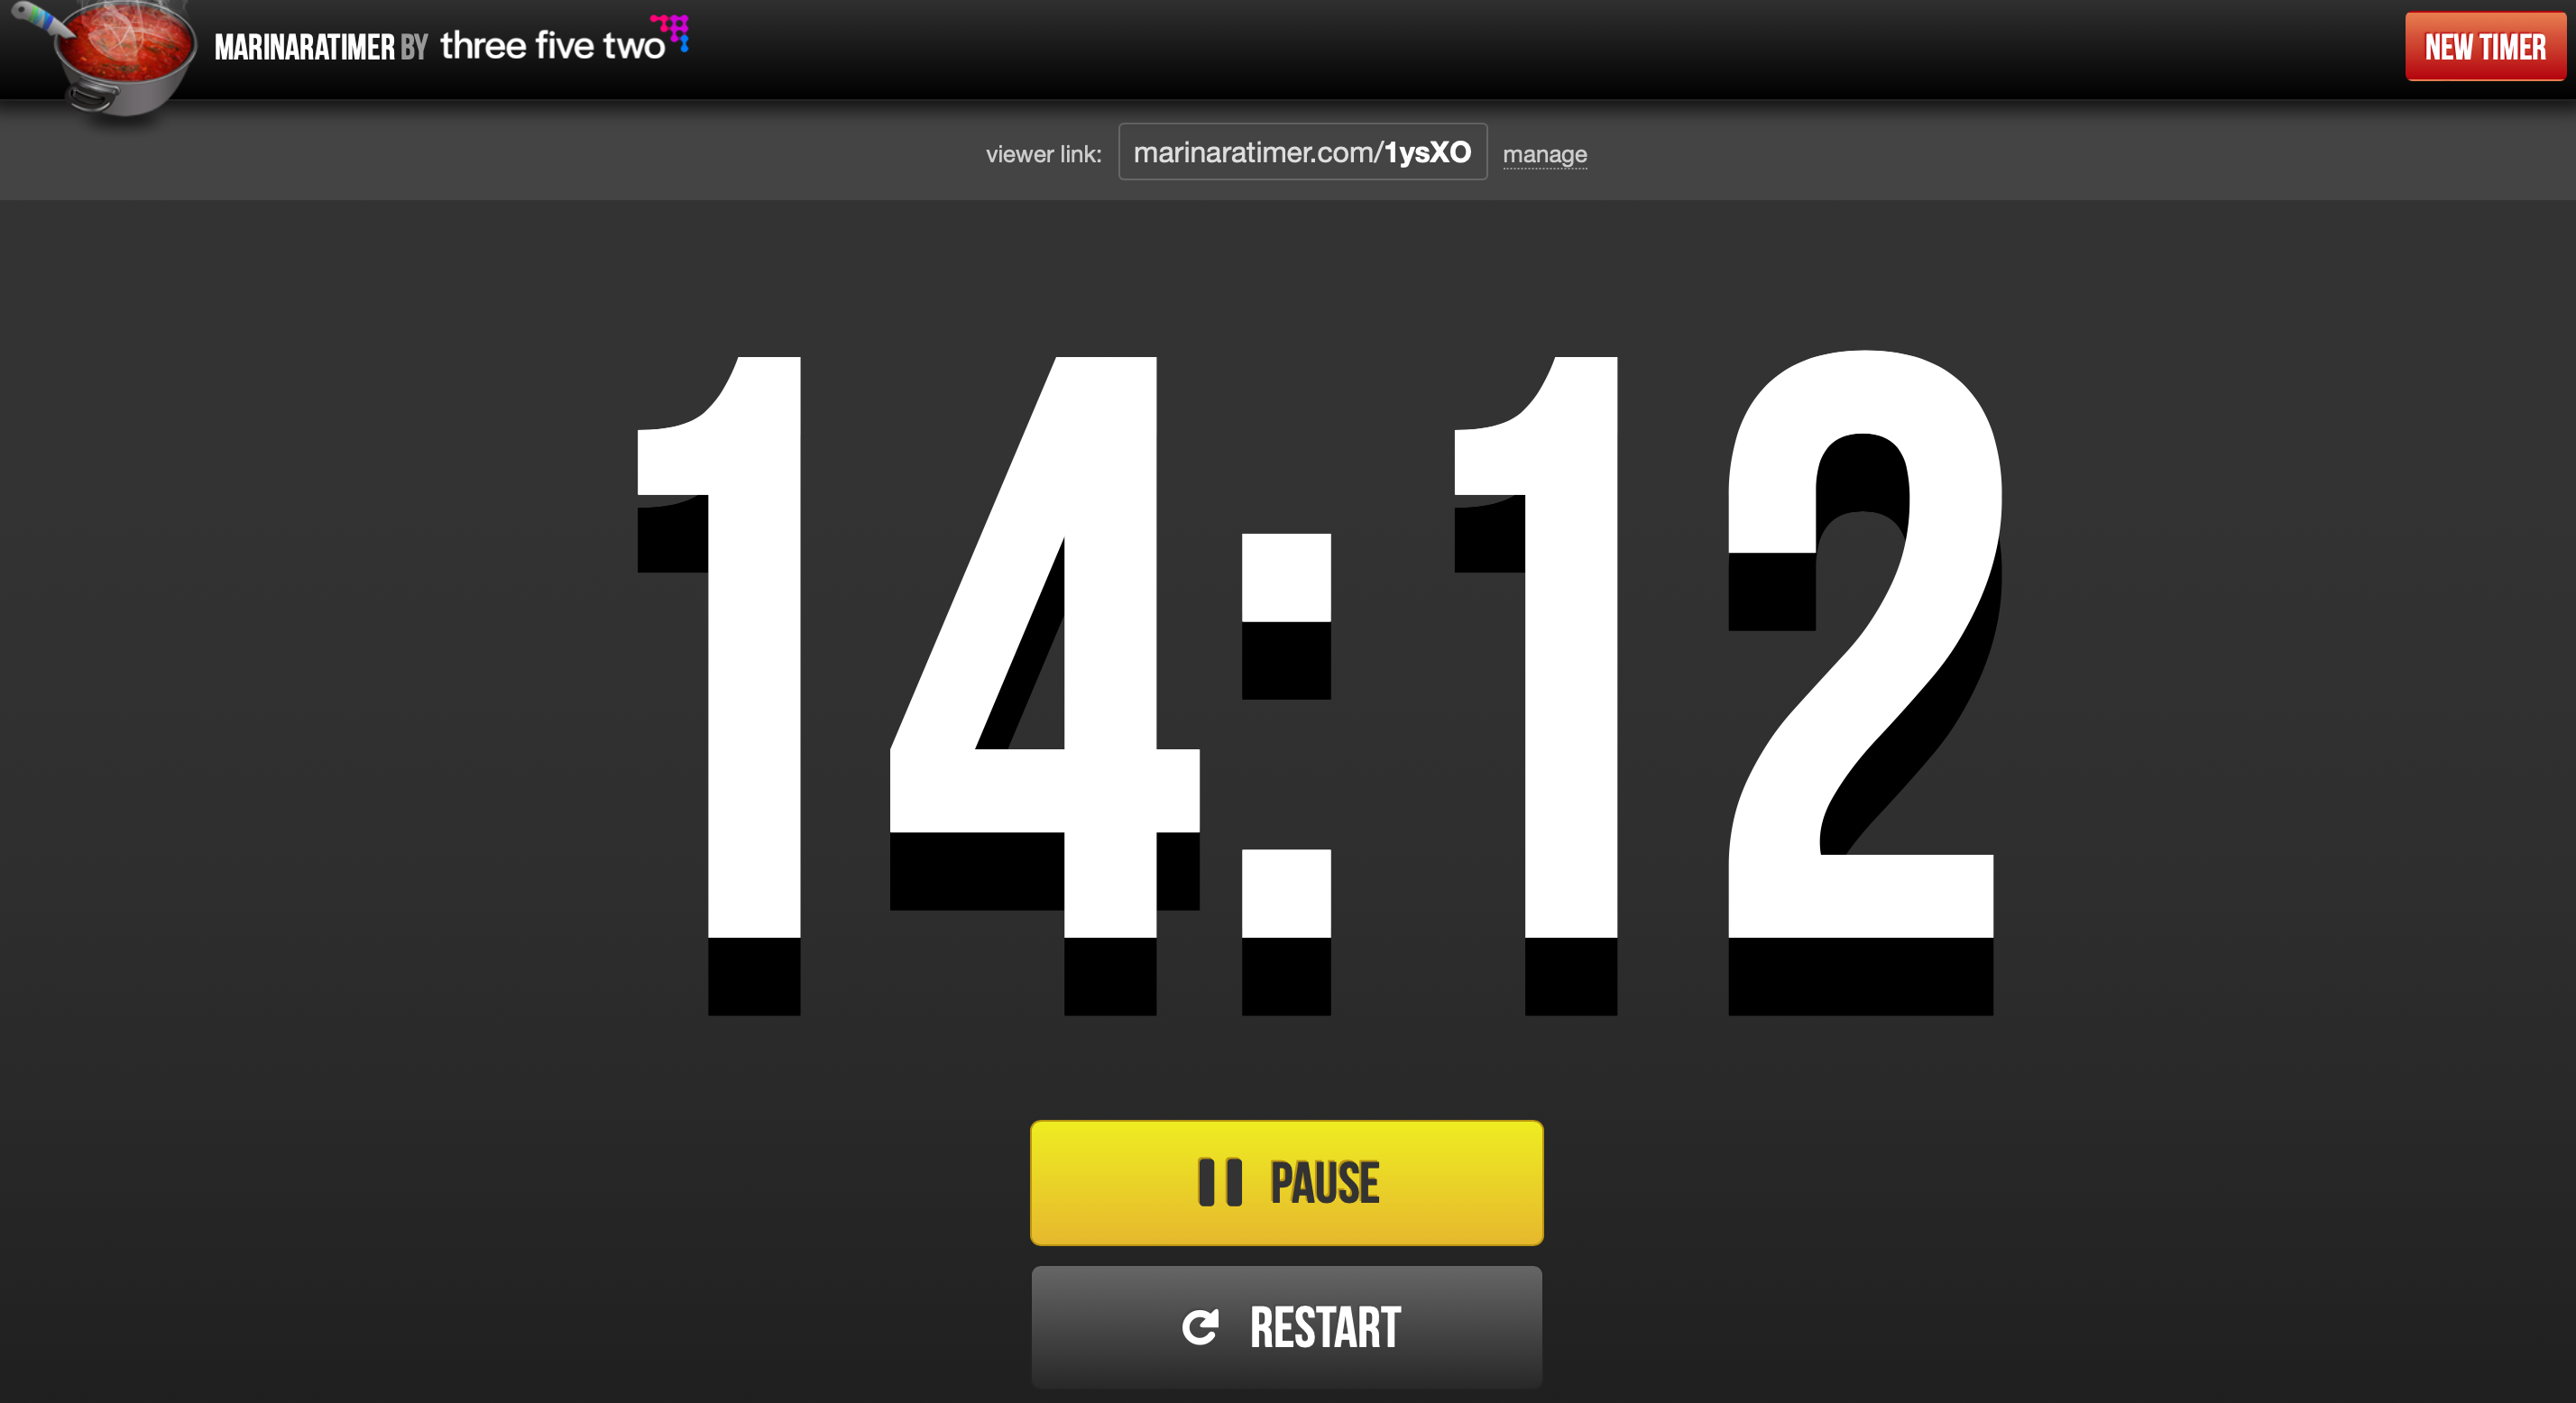 Screenshot of Marinara web app showing countdown interface